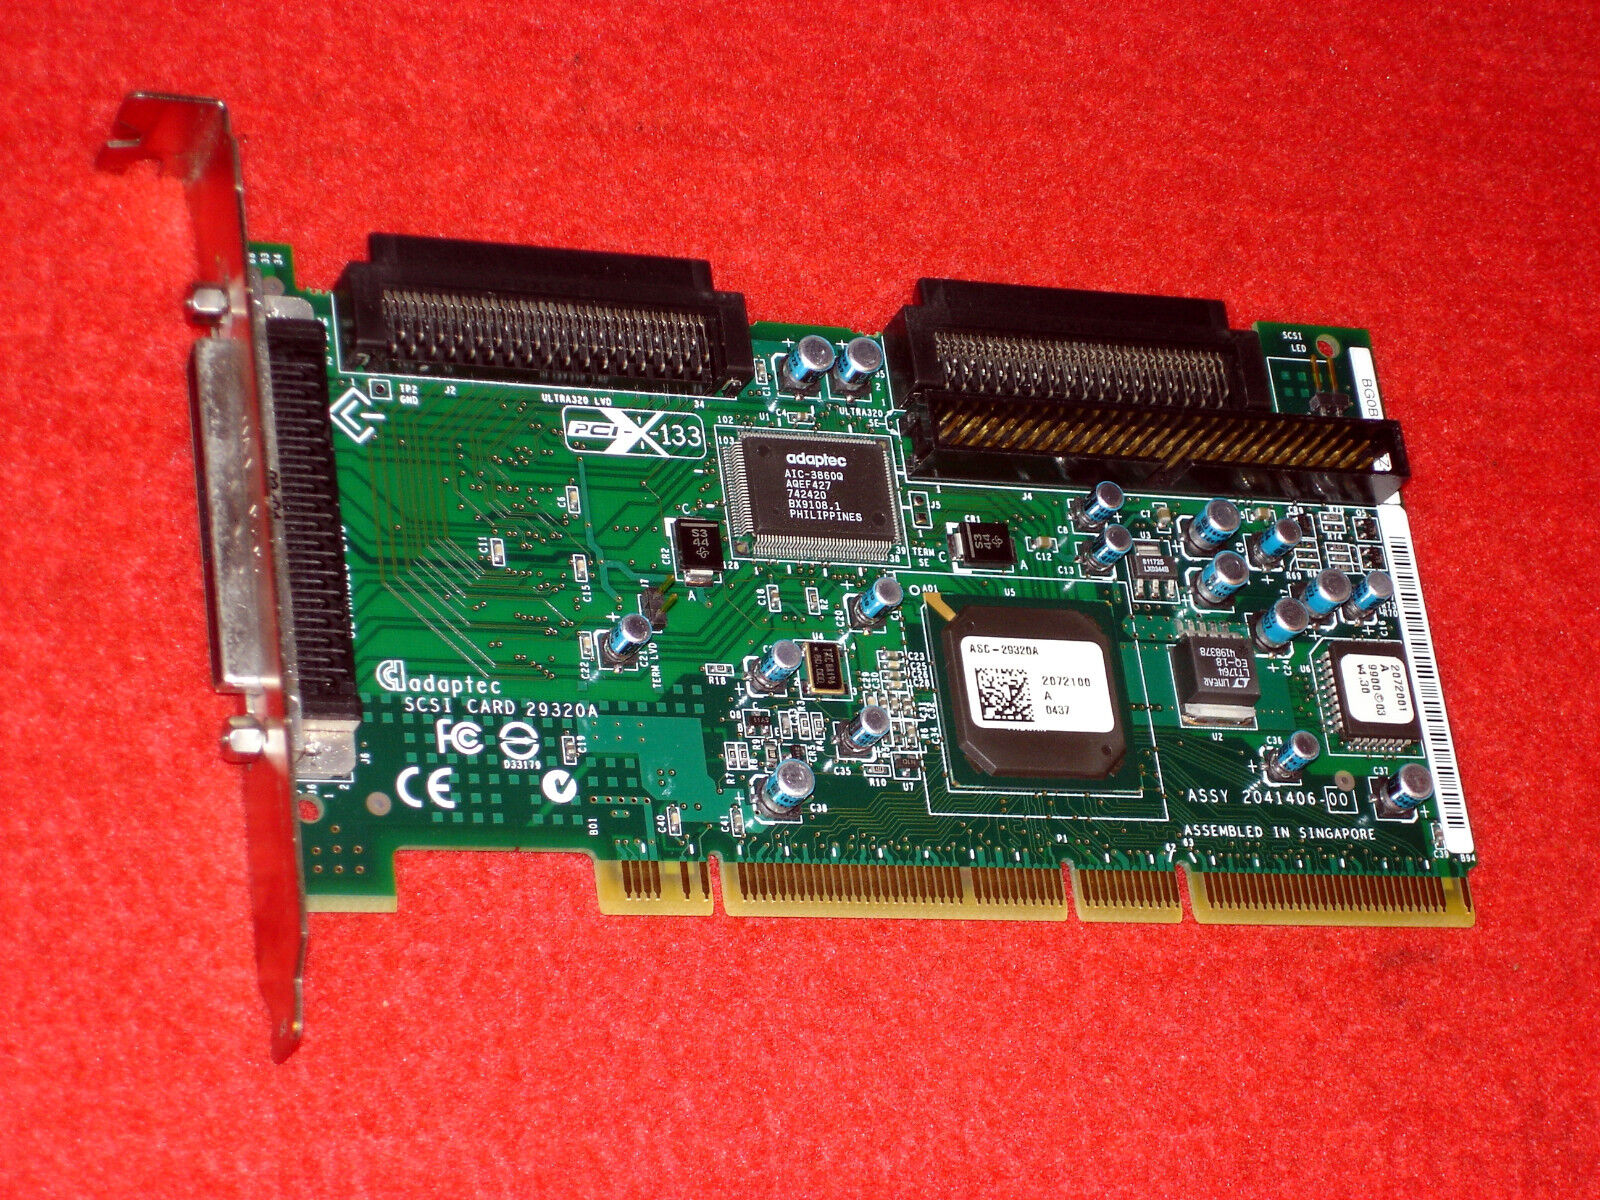 TOP Adaptec Controller Card ASC-29320A PCI-SCSI Adapter Ultra320 PCI3.0 PCI-X